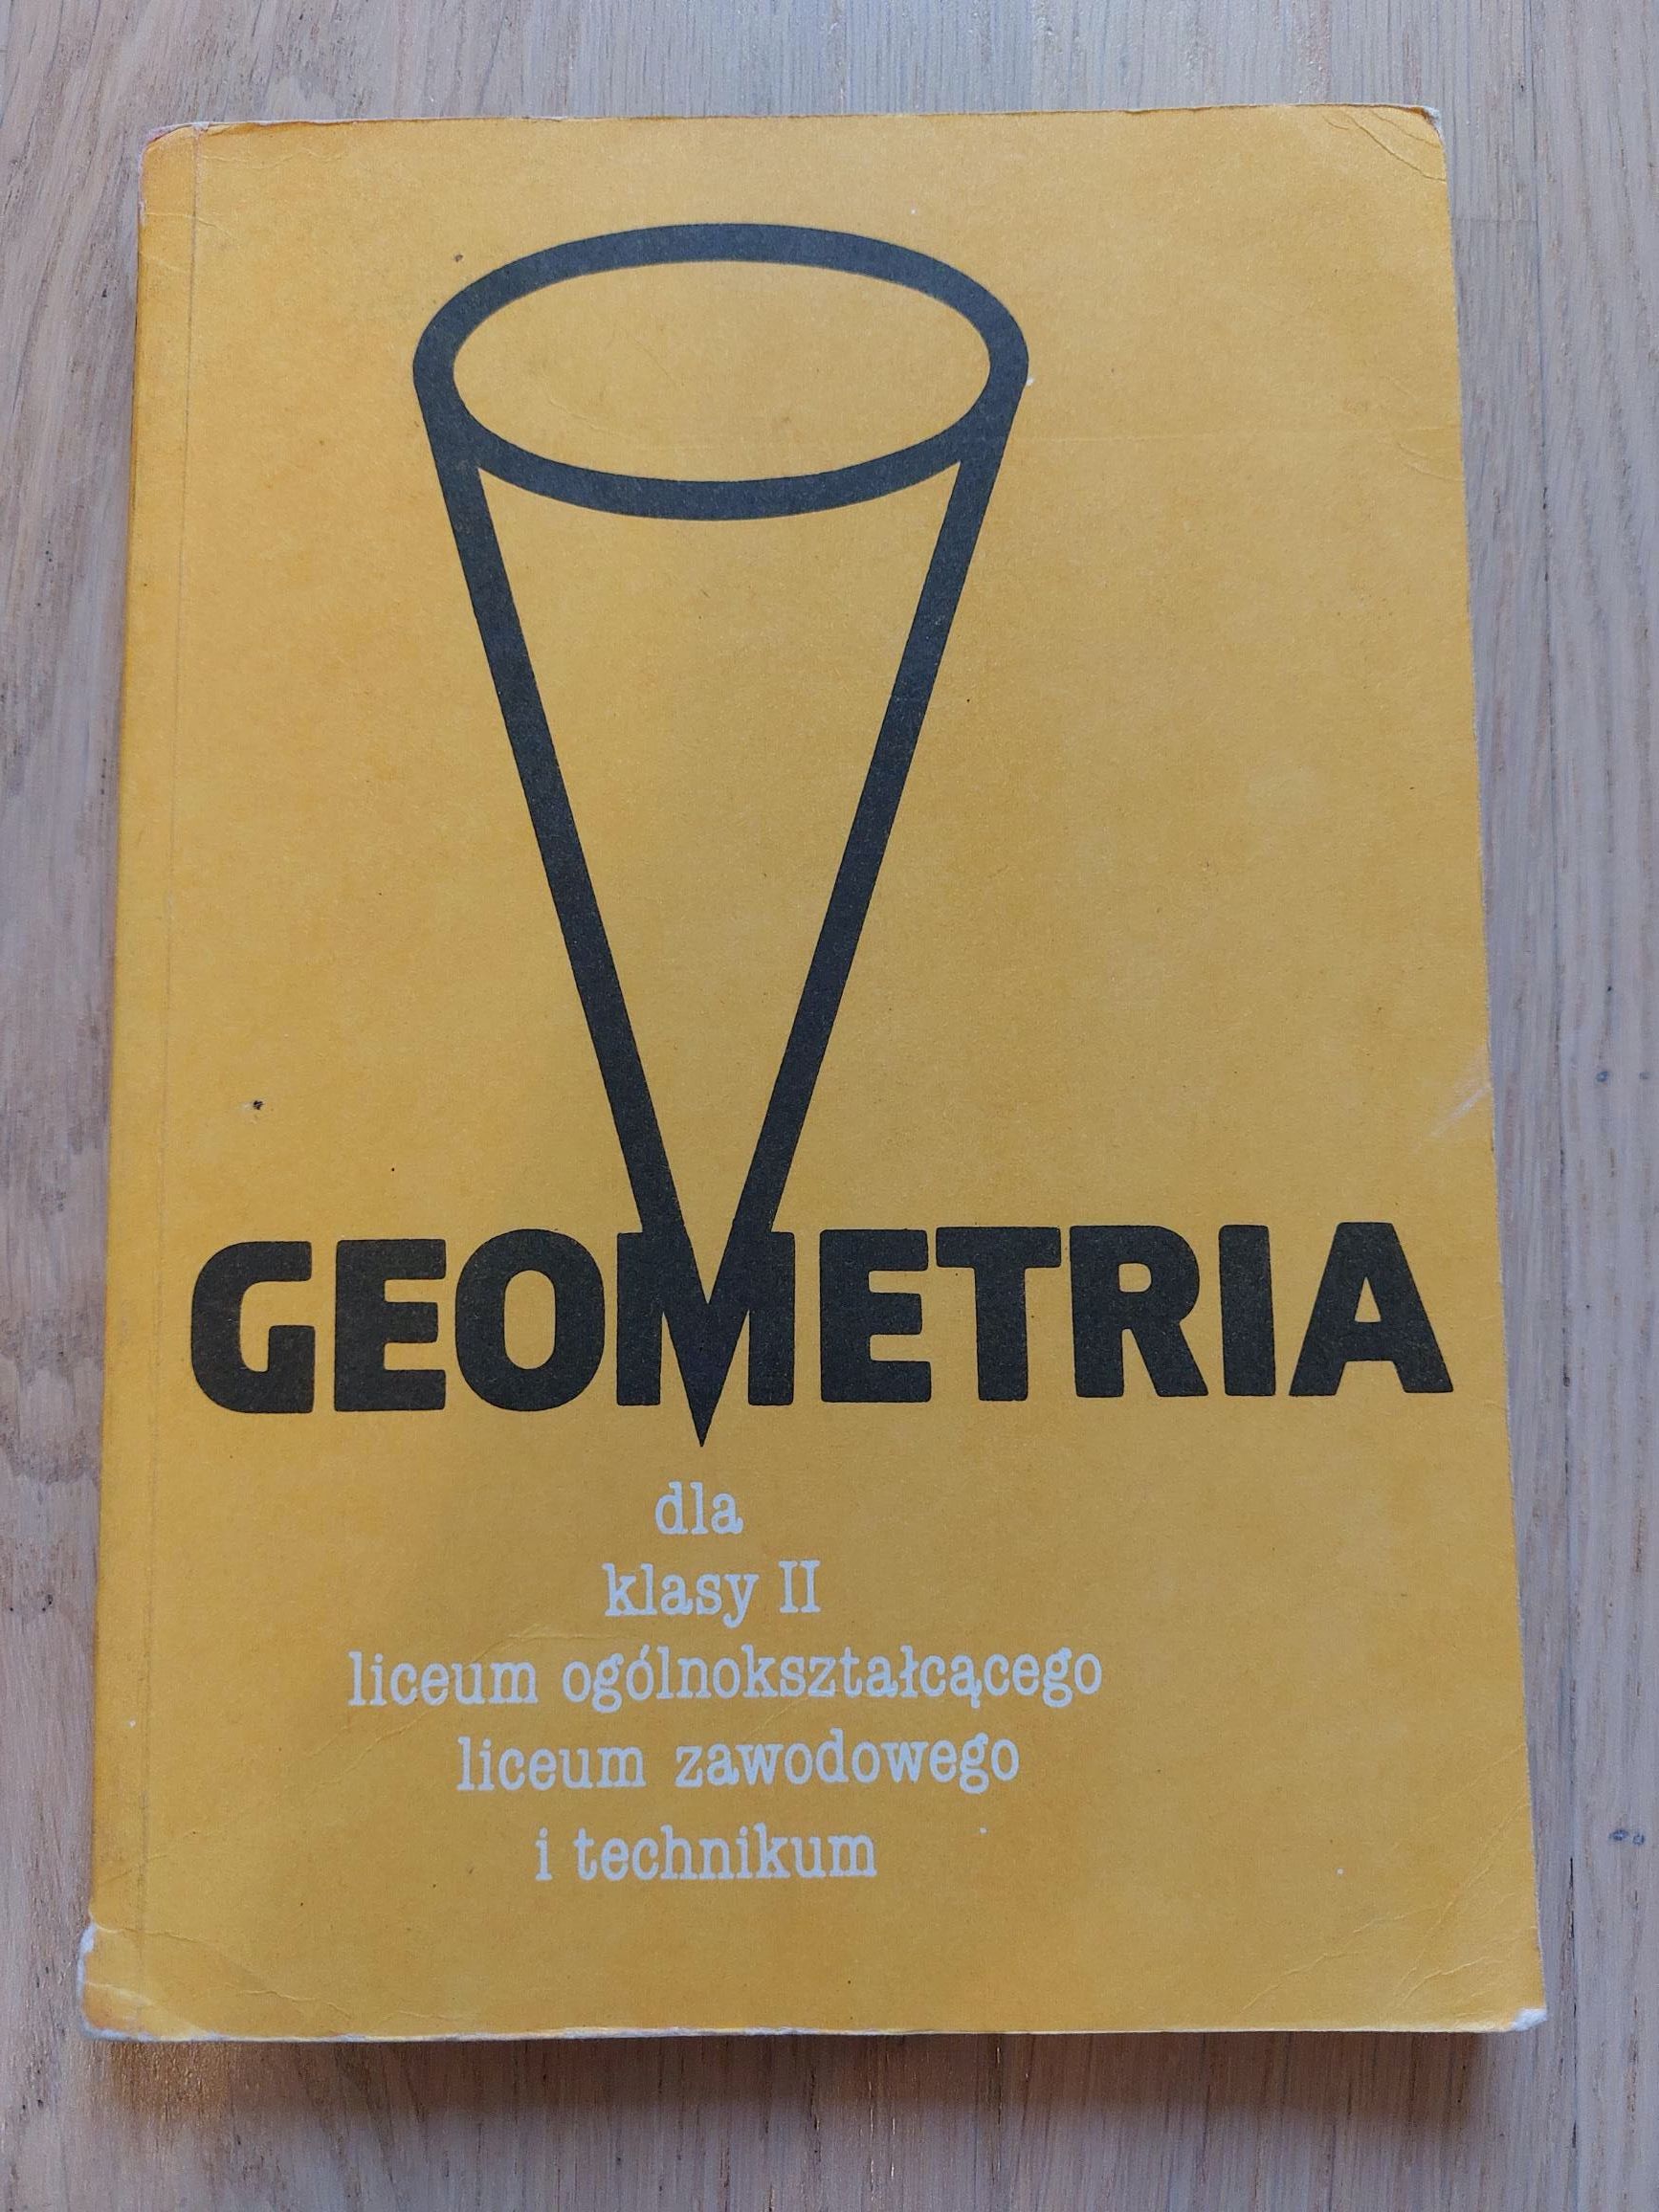 Geometria dla klasy II liceum, rok 1988